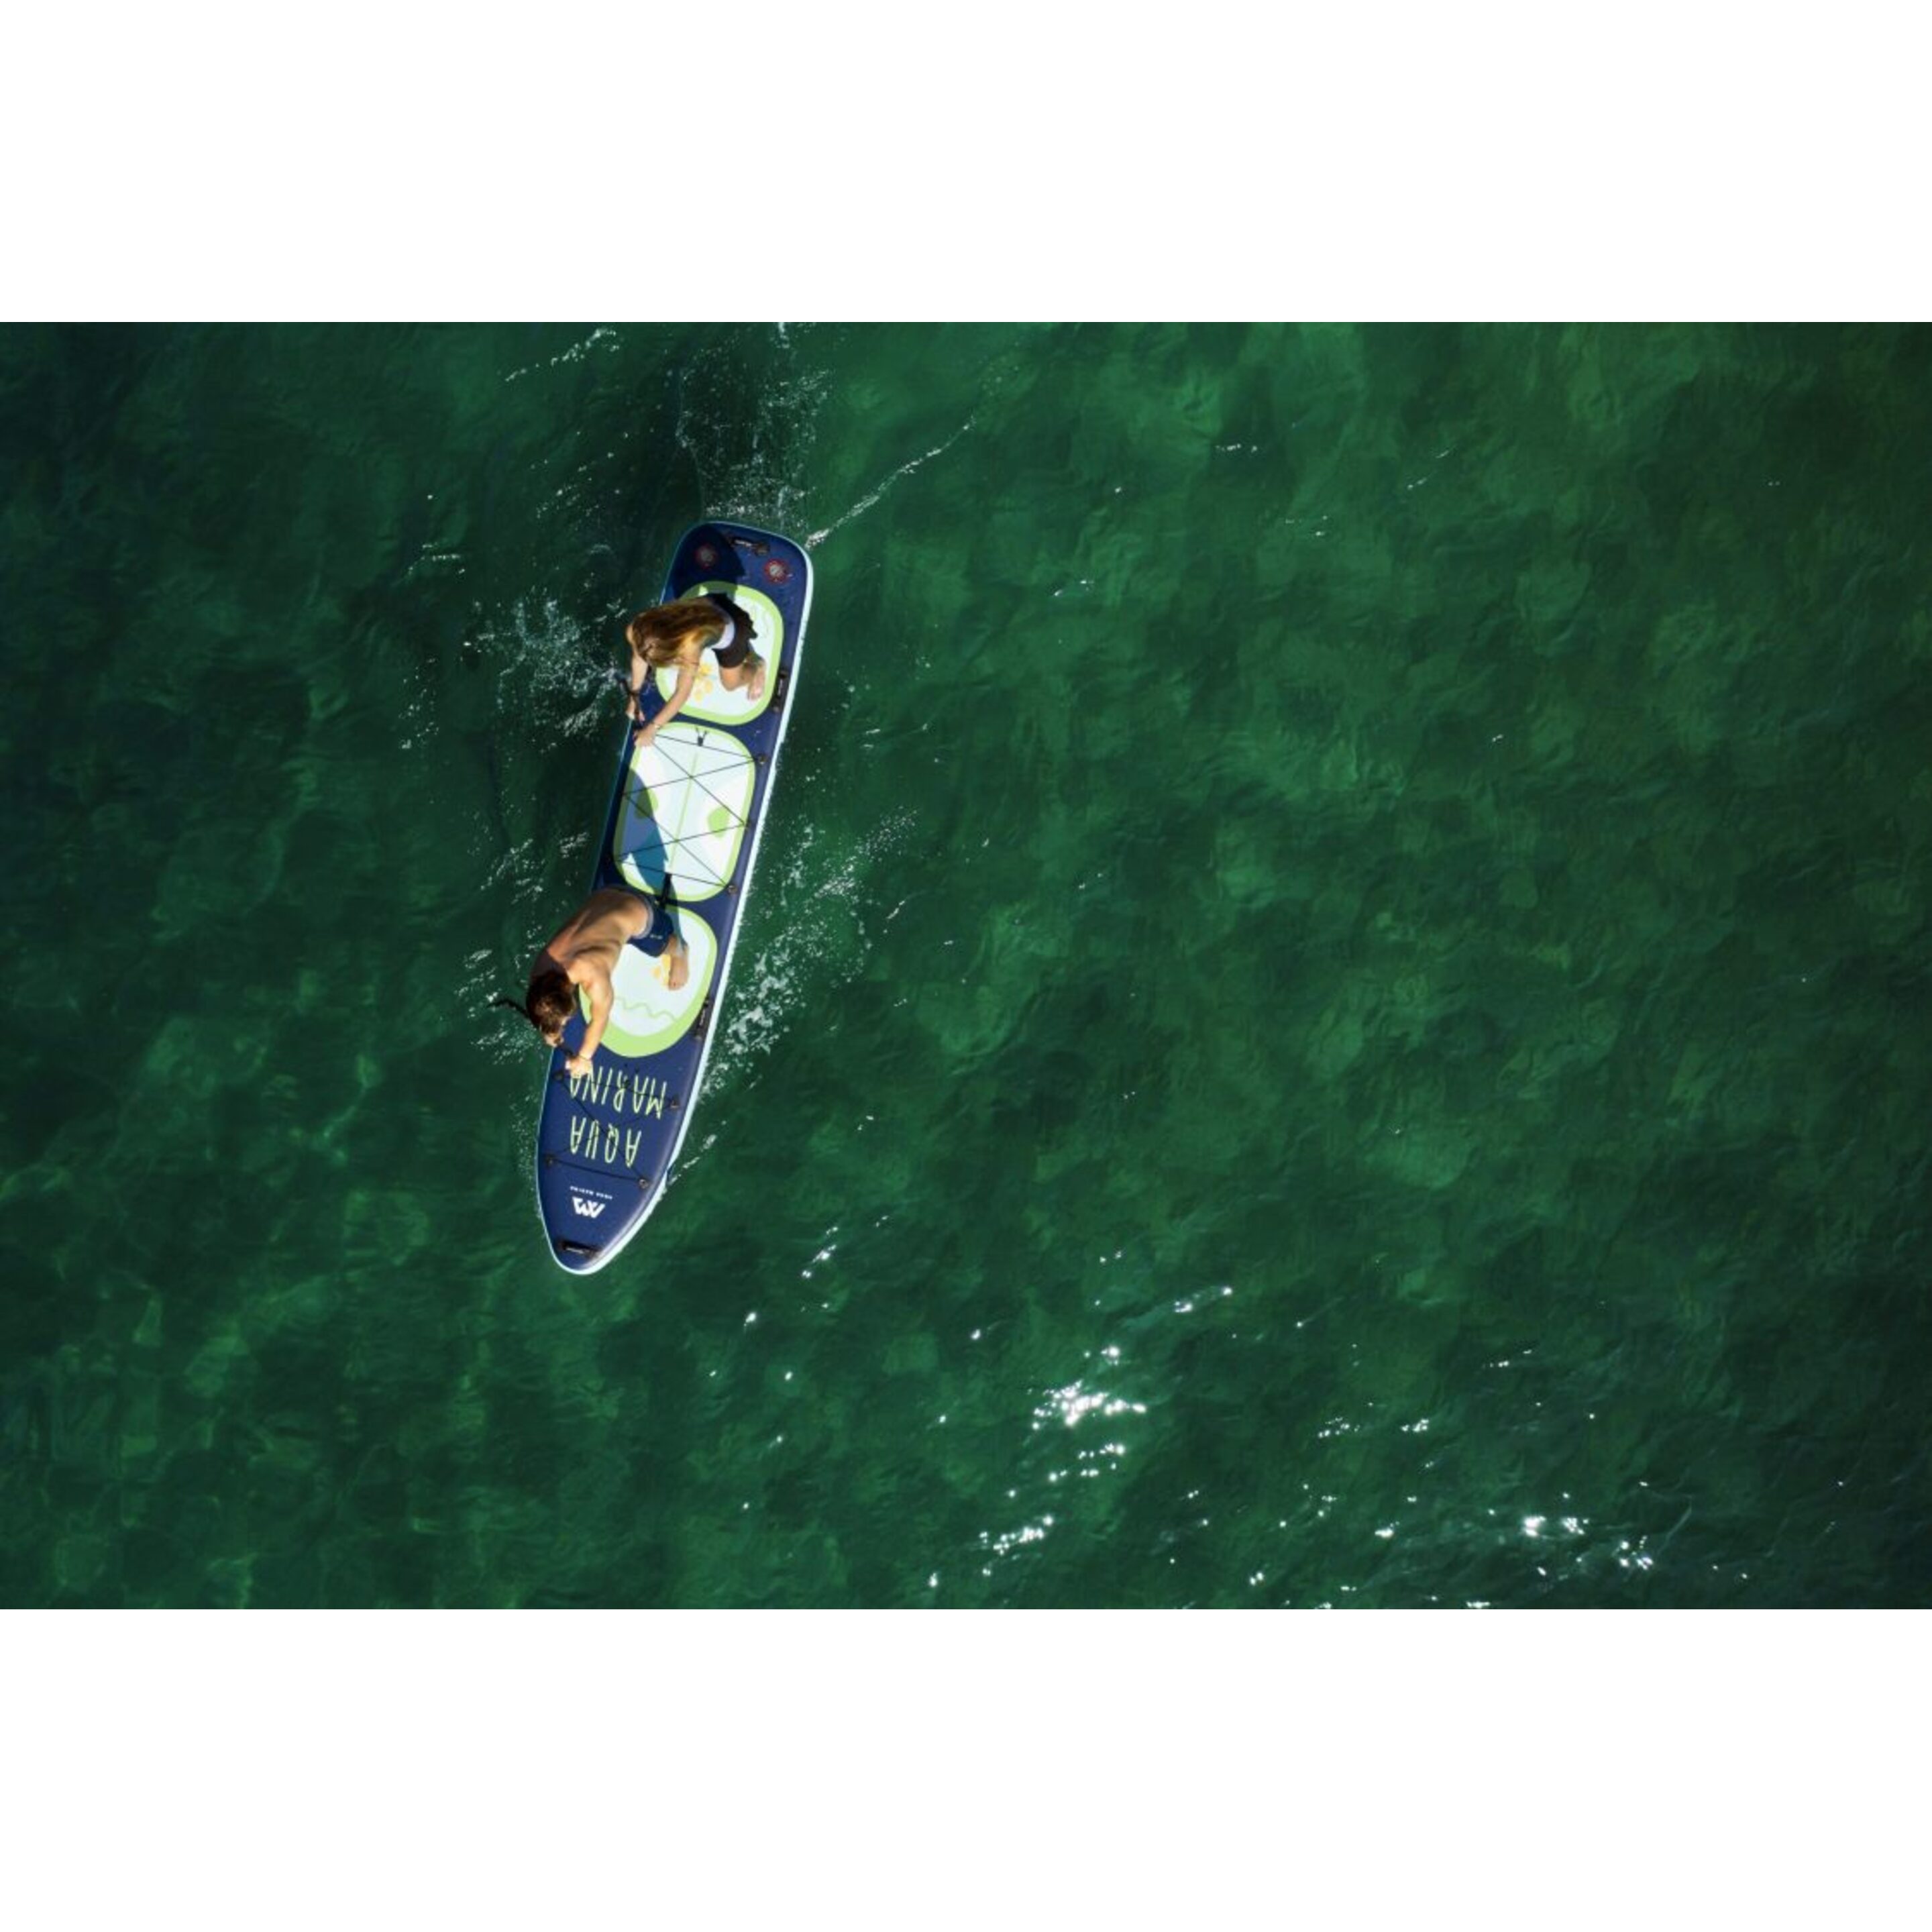 Tabla Paddle Surf Aqua Marina Super Trip Tandem 14’0? - Azul turquesa/Negro - Multiperson Series  MKP